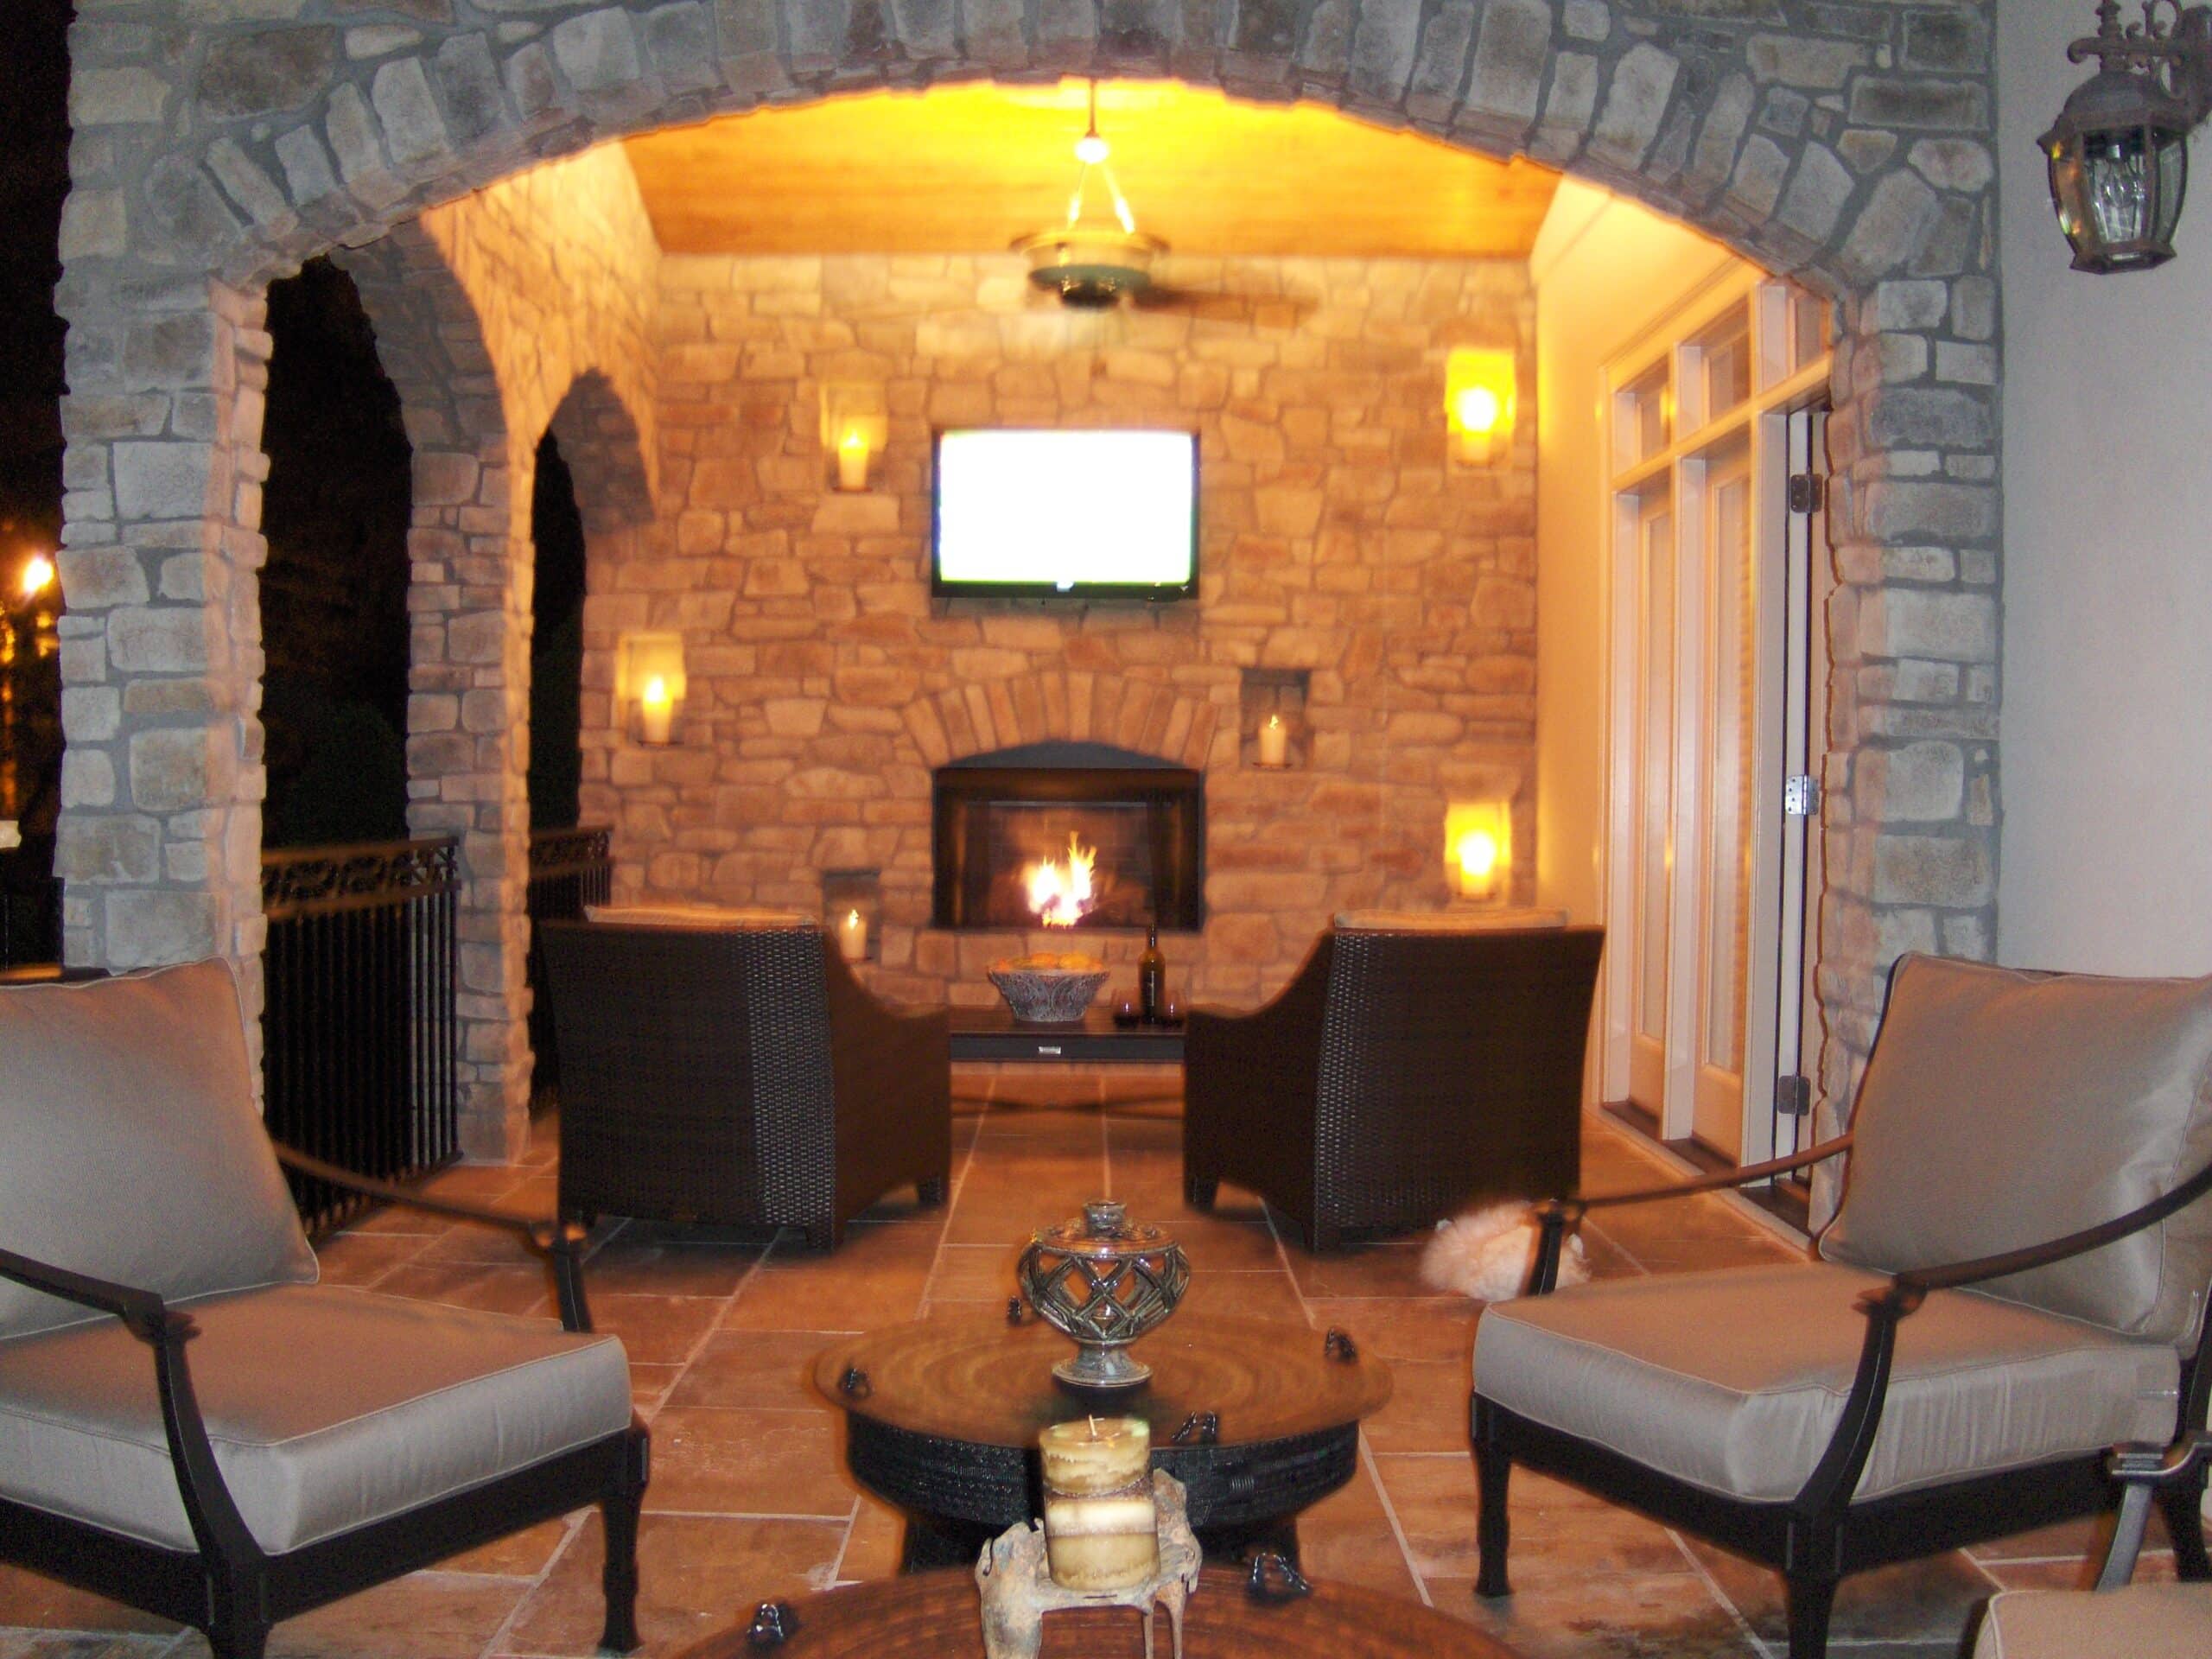 outdoor-stone-masonry-fireplace-room